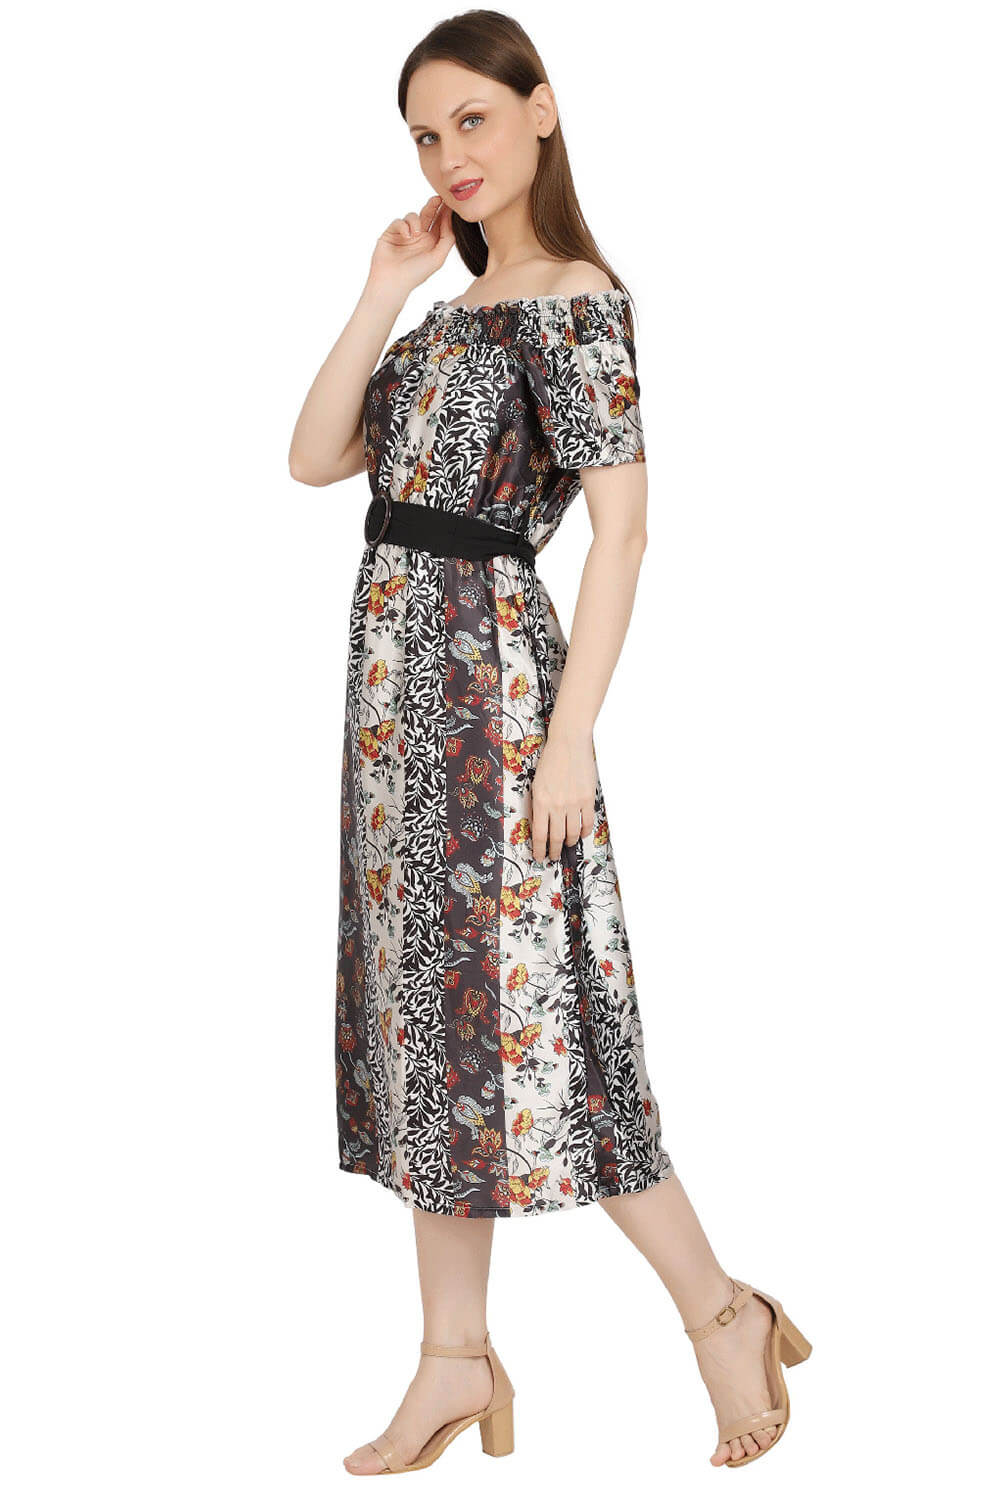 Eclectic Elegance Mix Print Midi Dress